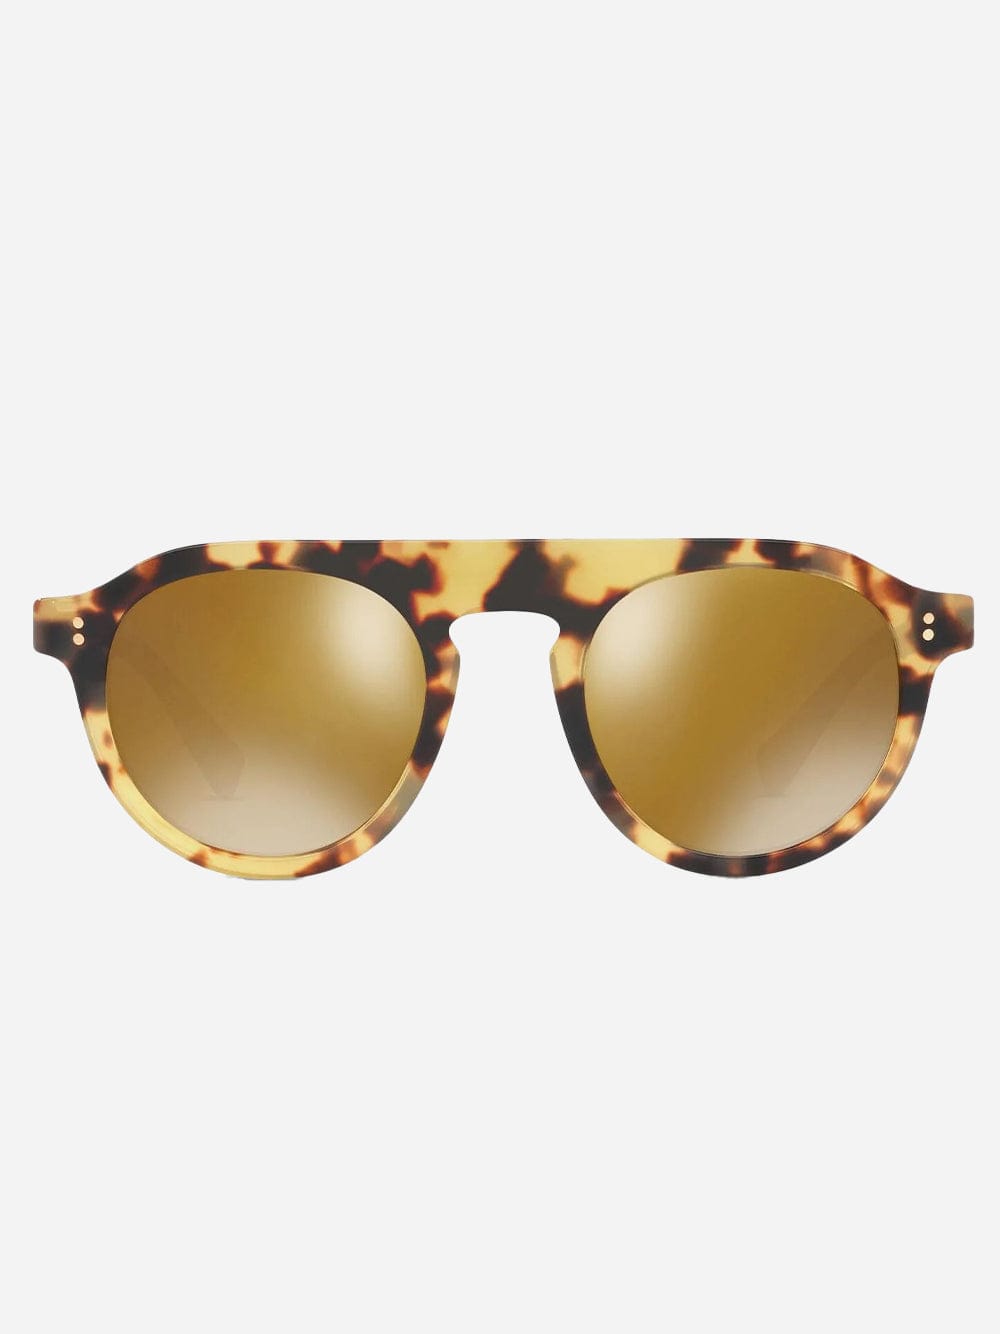 Dolce & Gabbana DG 4306 Animal Print Sunglasses